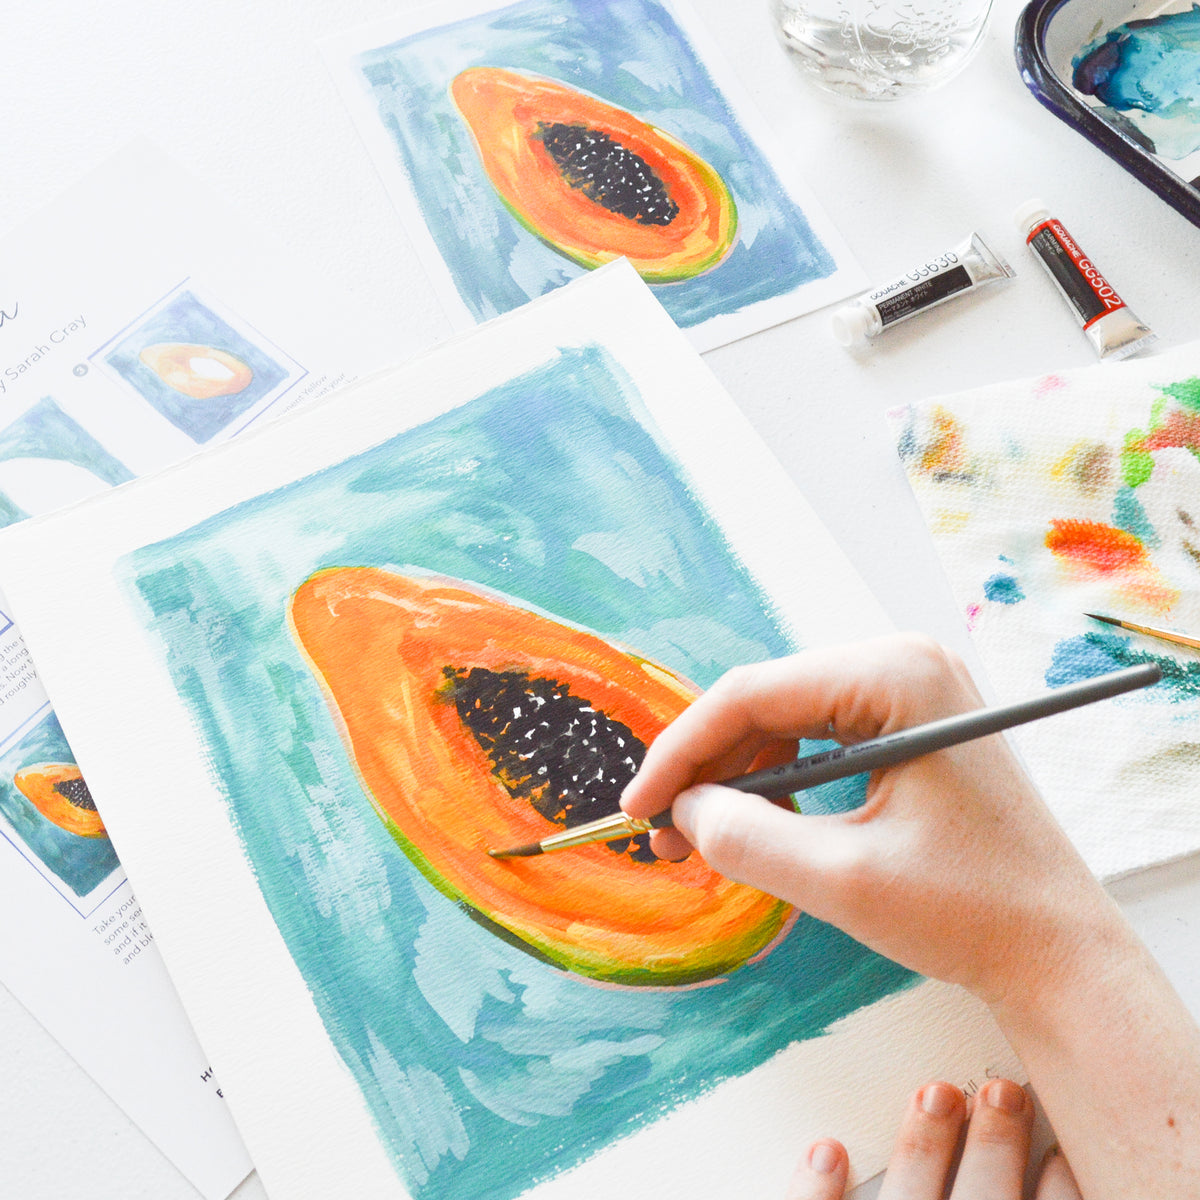 Buy CrafTreat Papaya Peach Acrylic Chalk Paint 250ml, Multi Surface and Mixed Media Paints